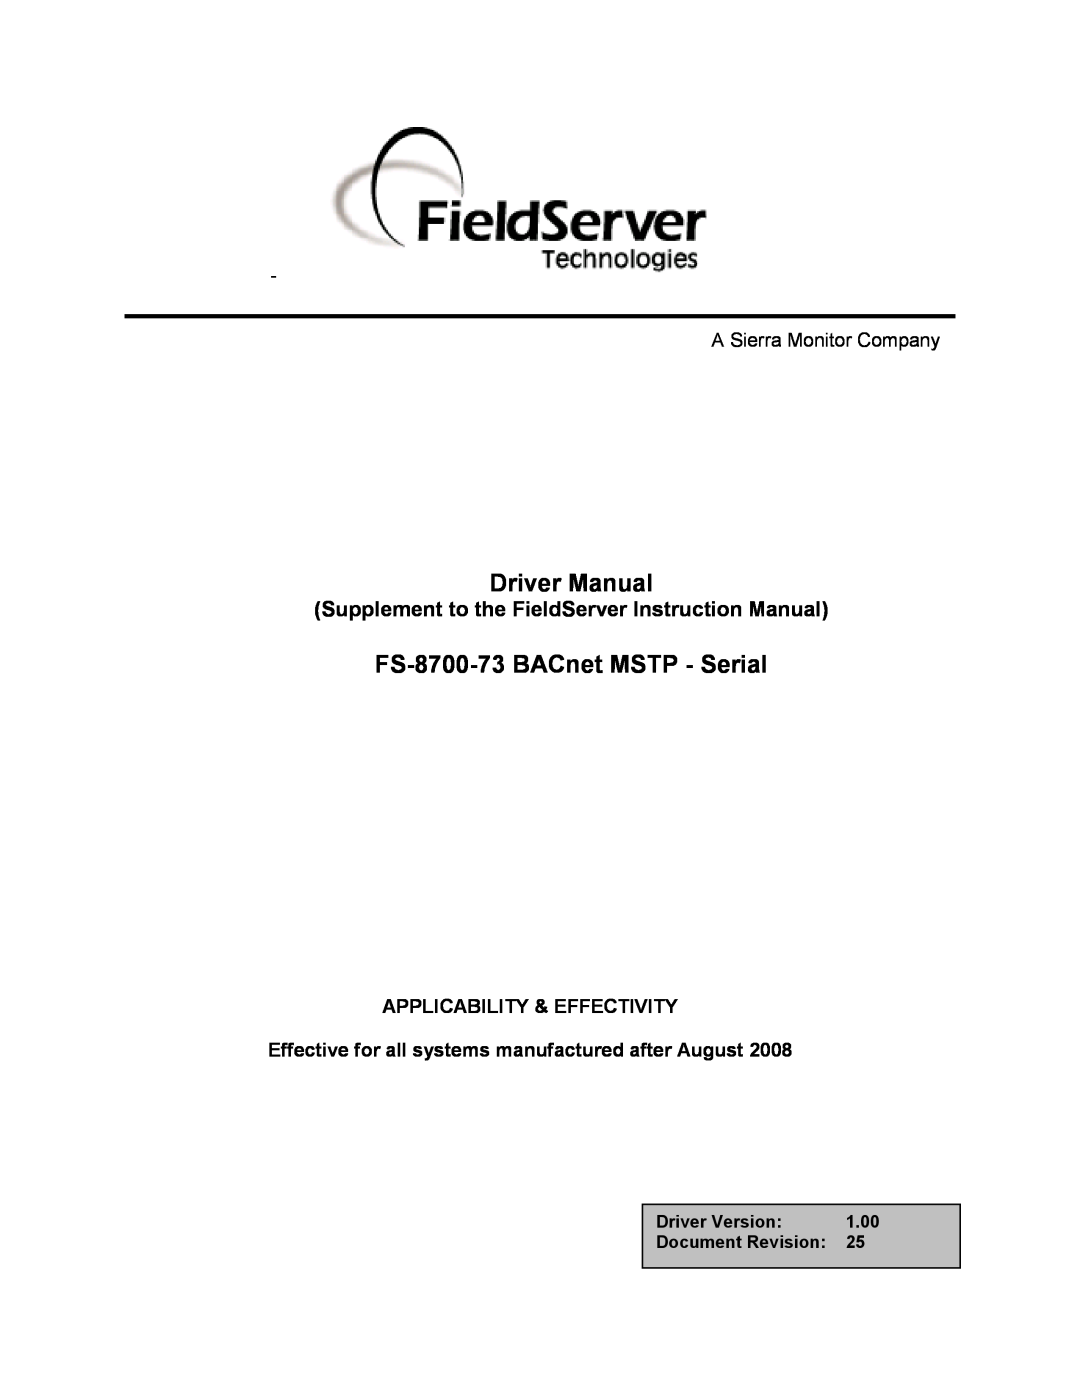 FieldServer FS-8700-73 instruction manual A Sierra Monitor Company, Applicability & Effectivity, Driver Manual 